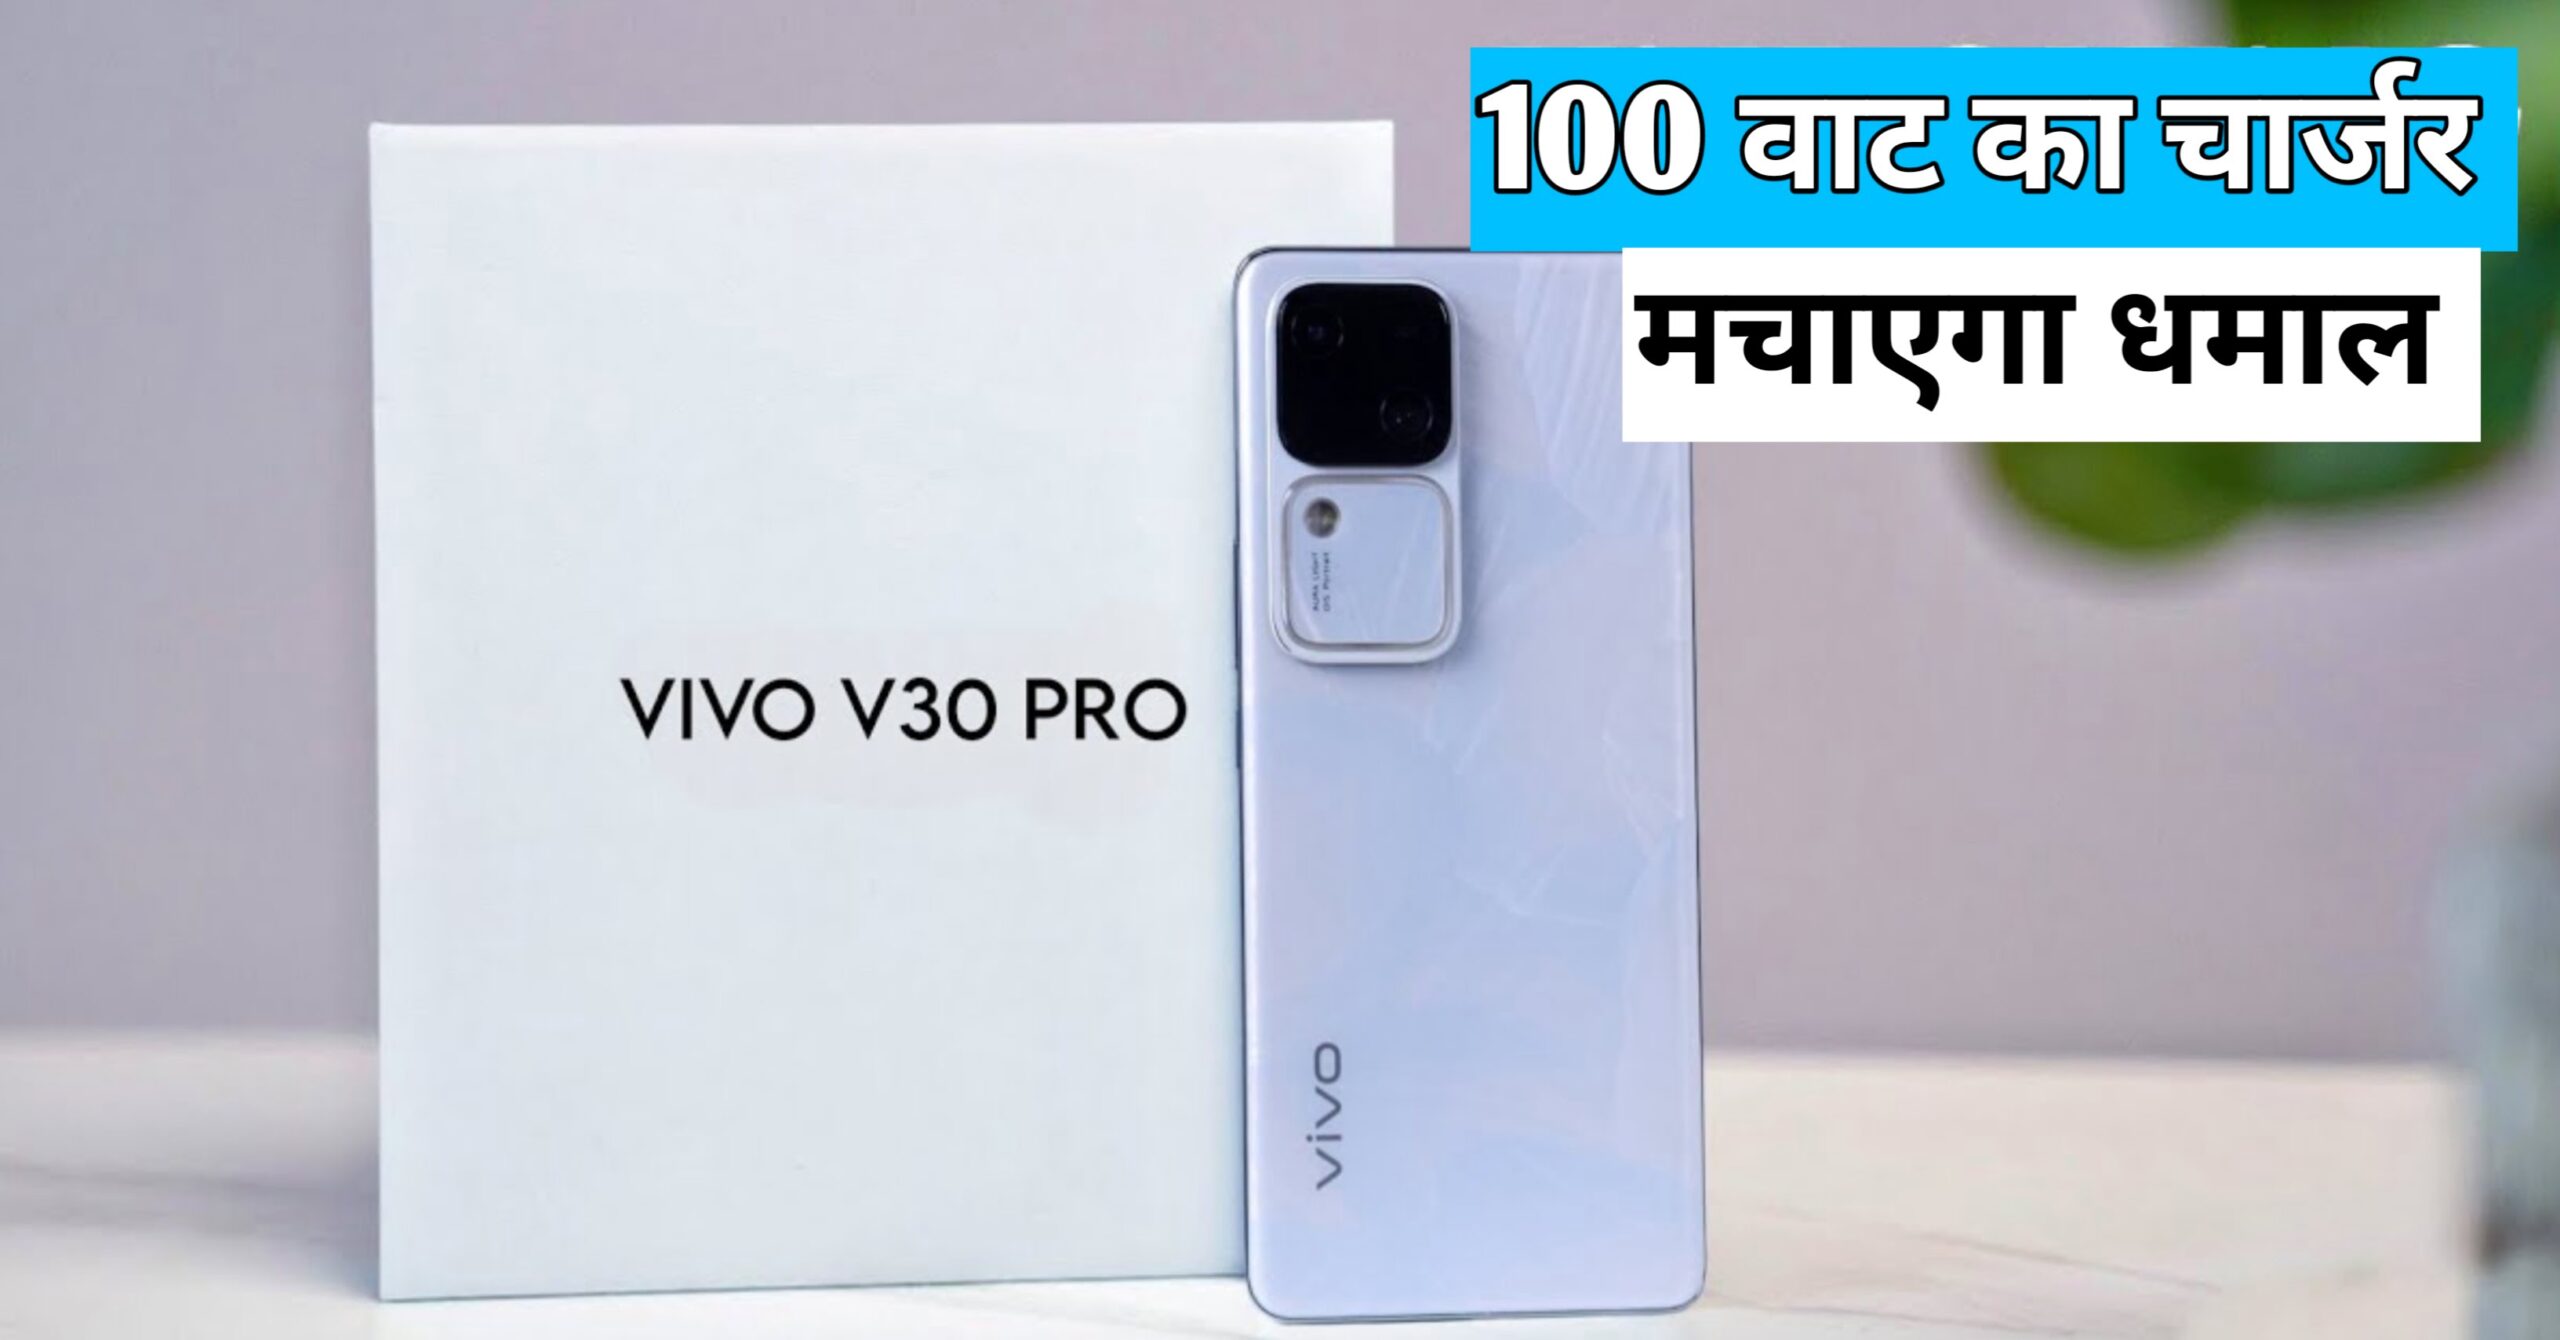 Vivo v30 Pro launch date in India